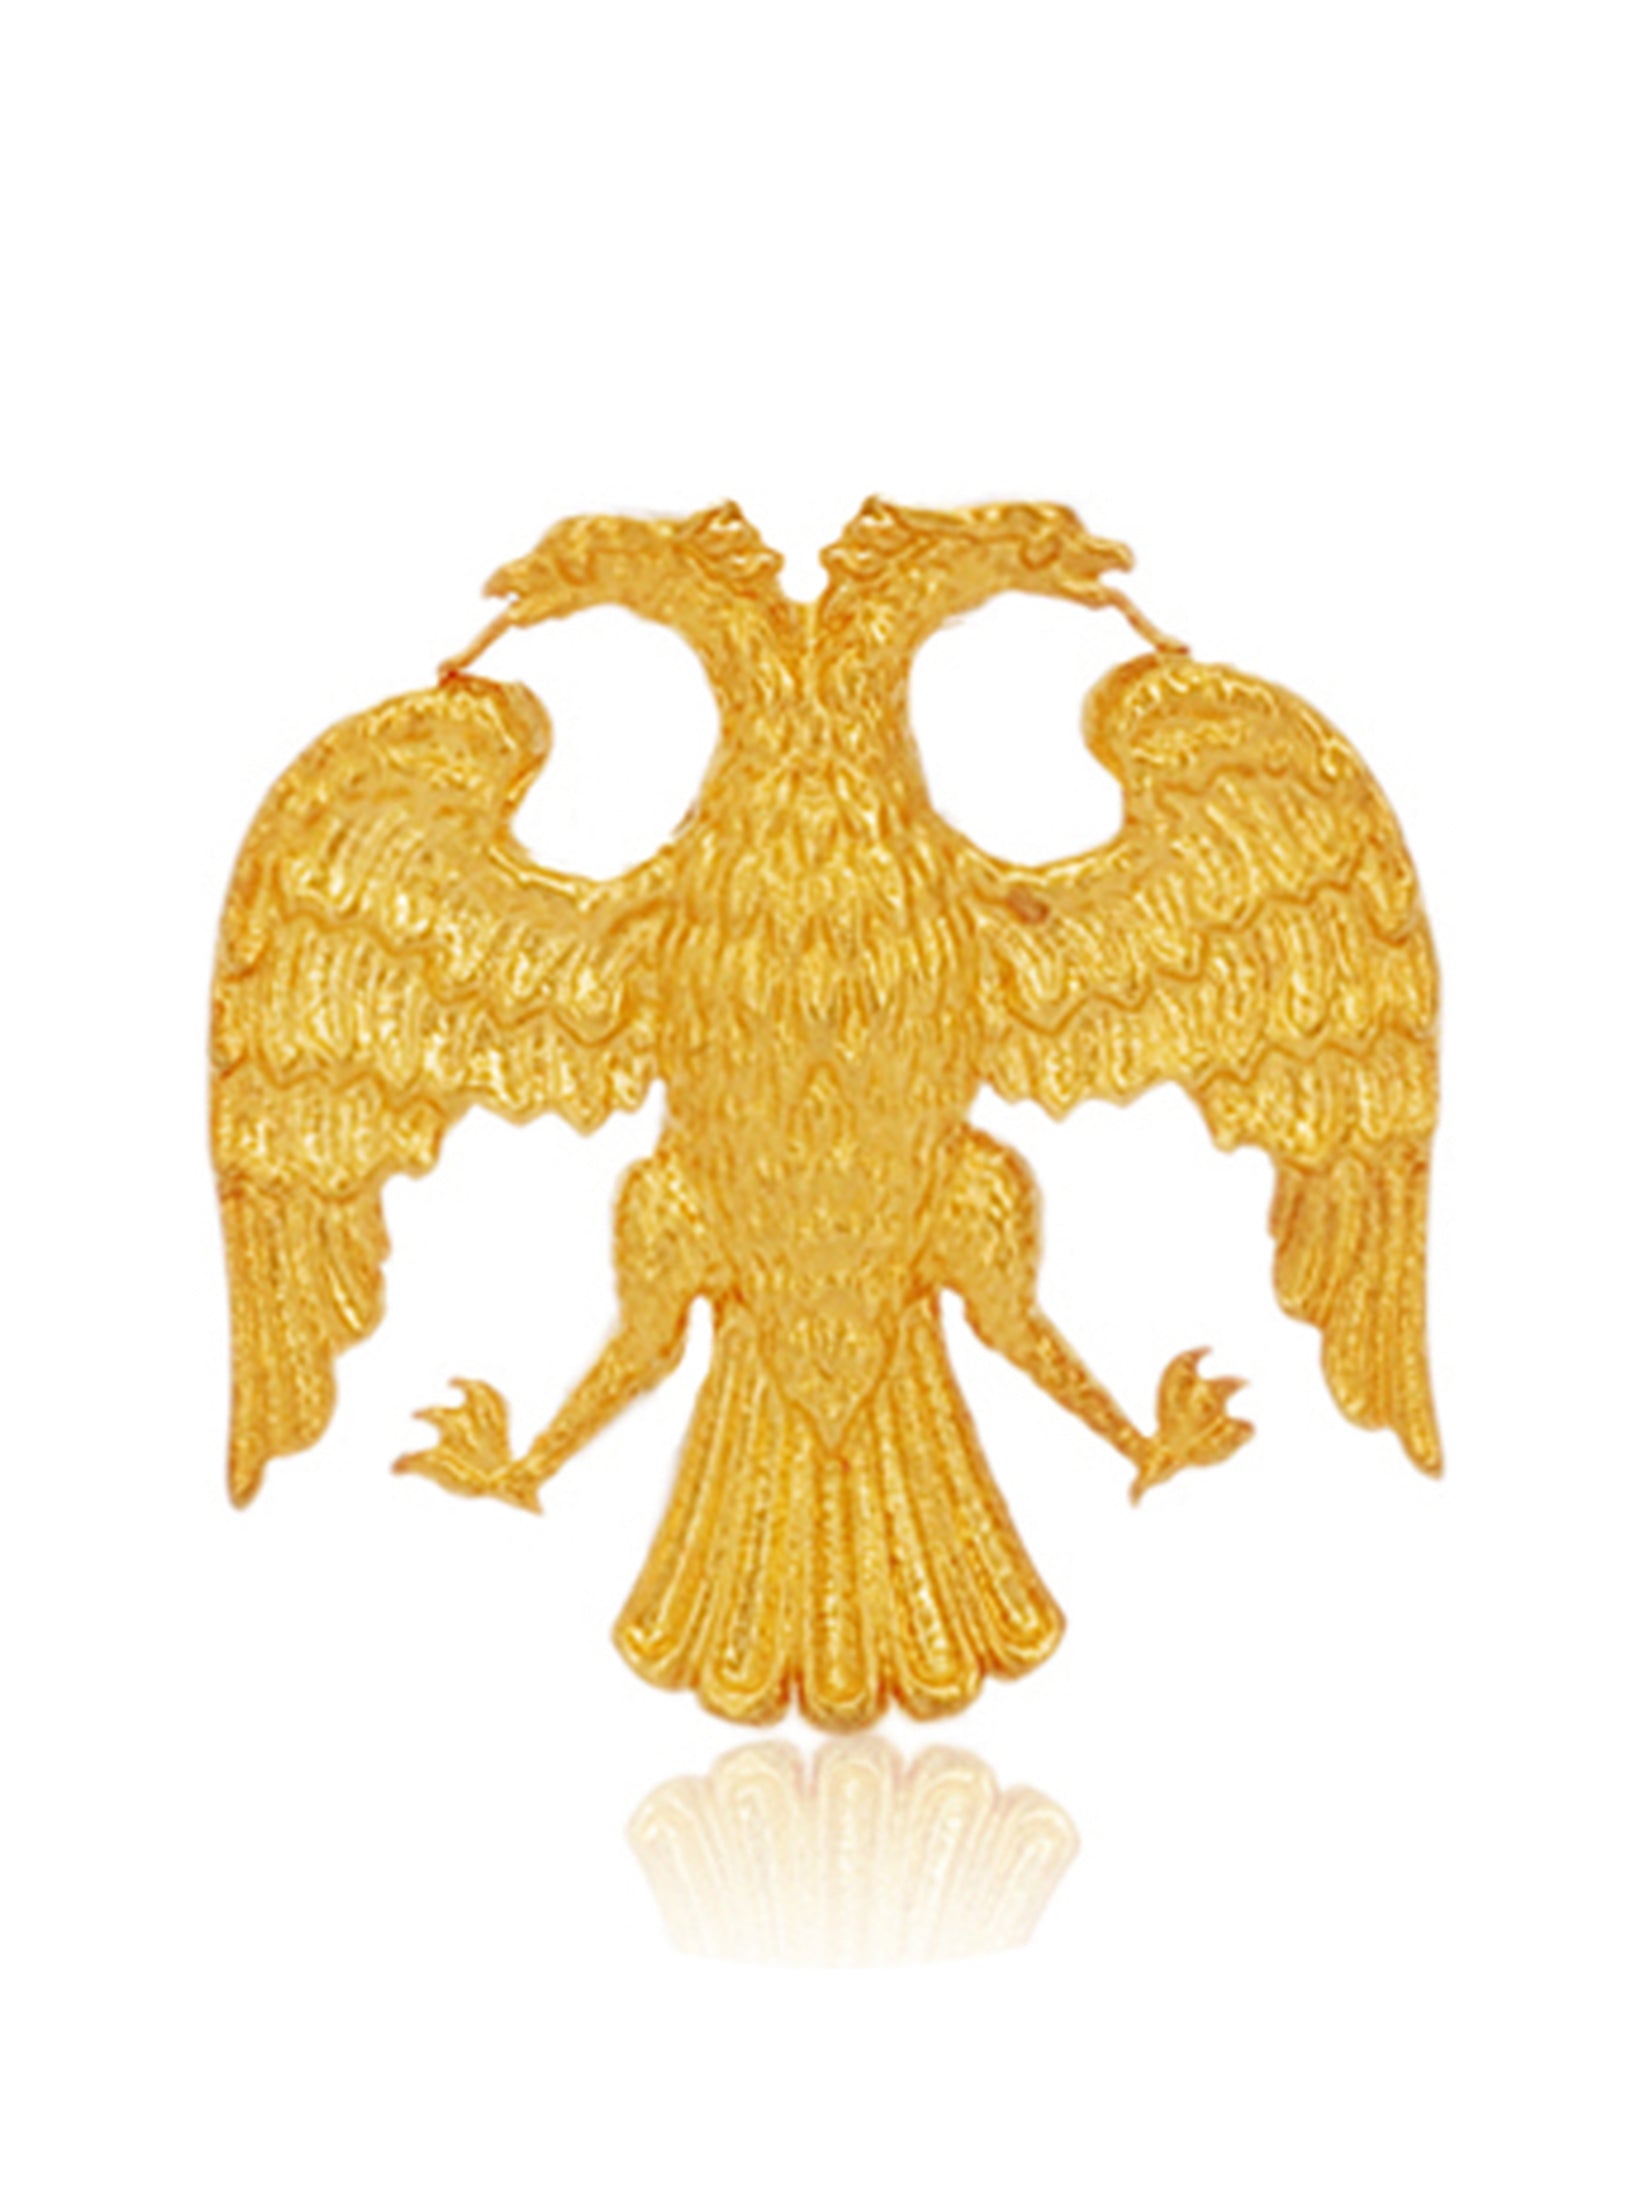 Byzantine Eagle Cufflinks